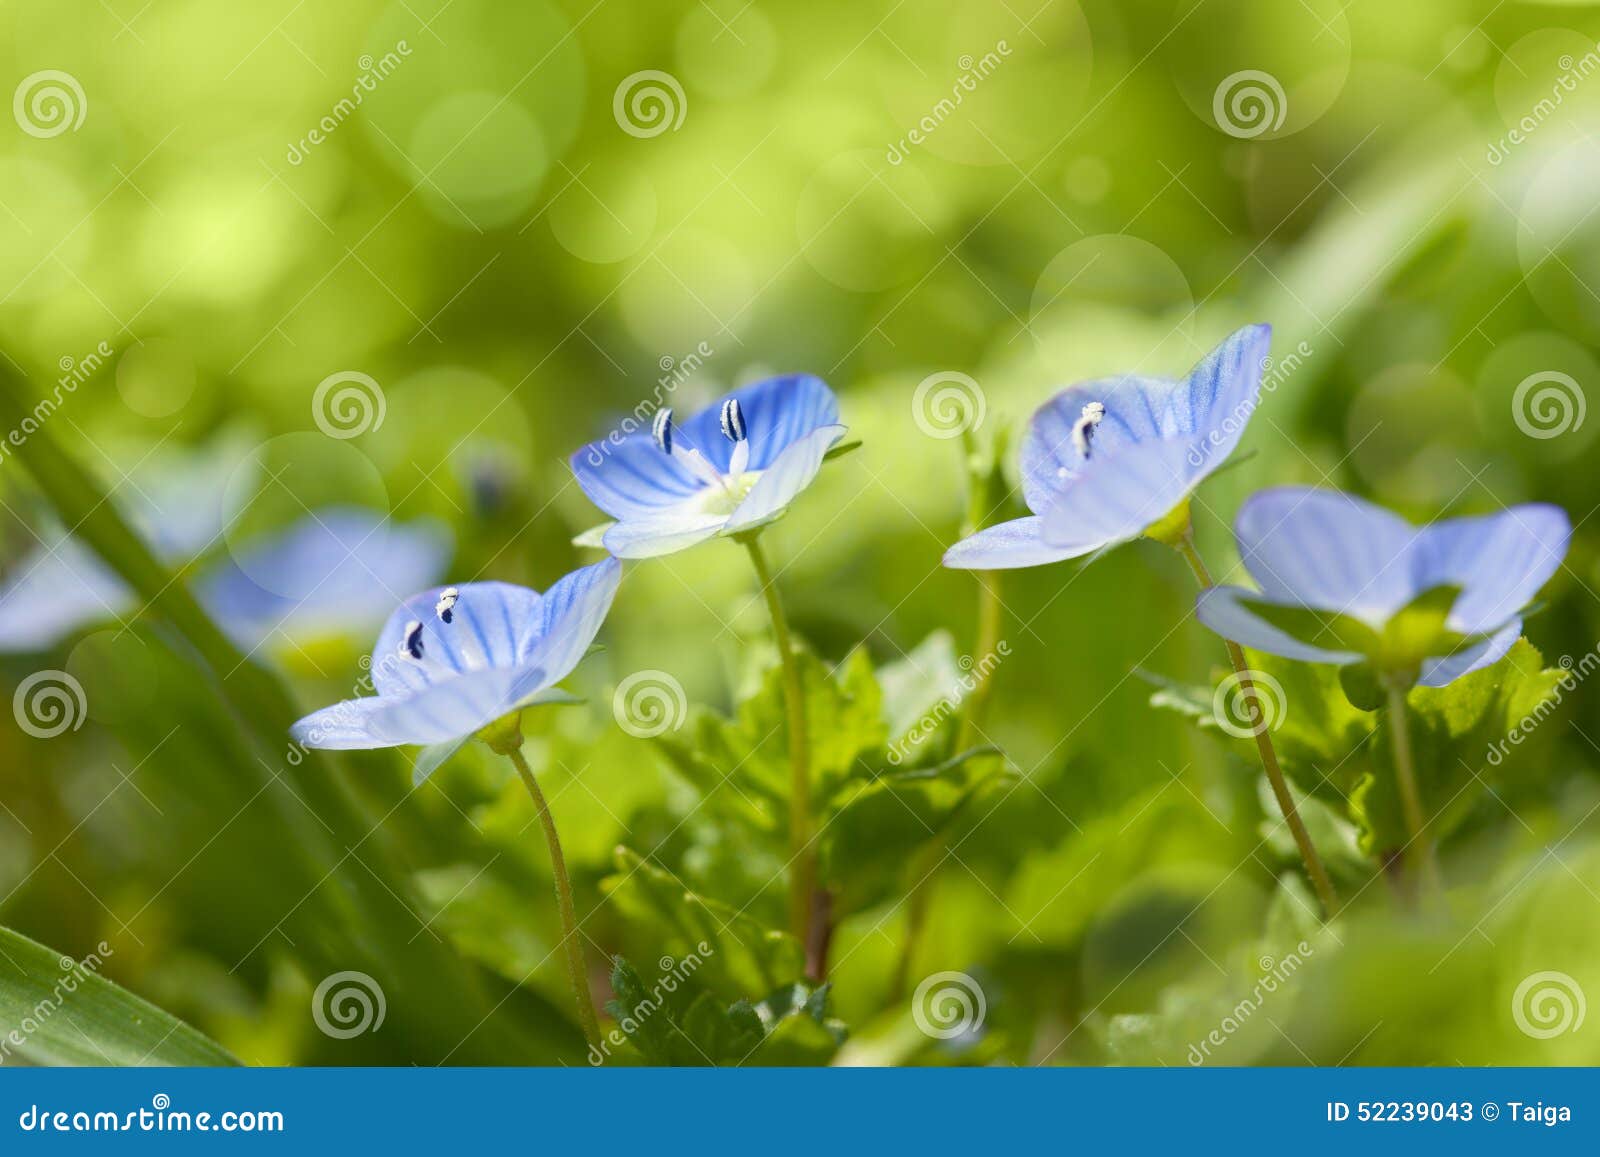 blue wild flowers on defocused background - fresh spring nature